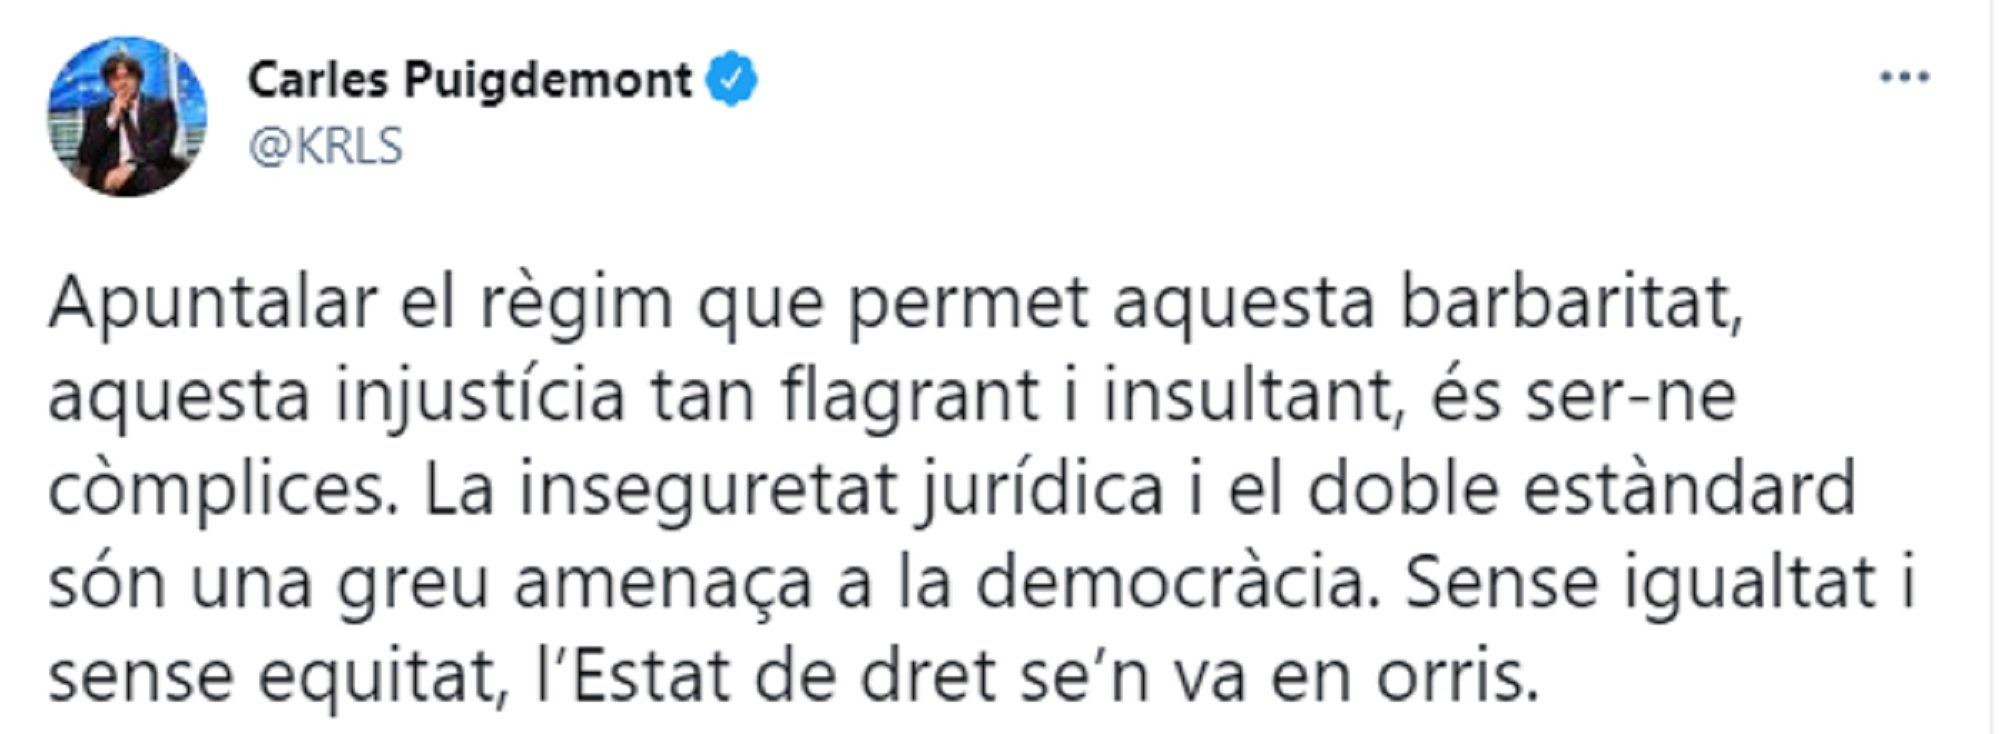 TUIT Carles Puigdemont Blanquerna